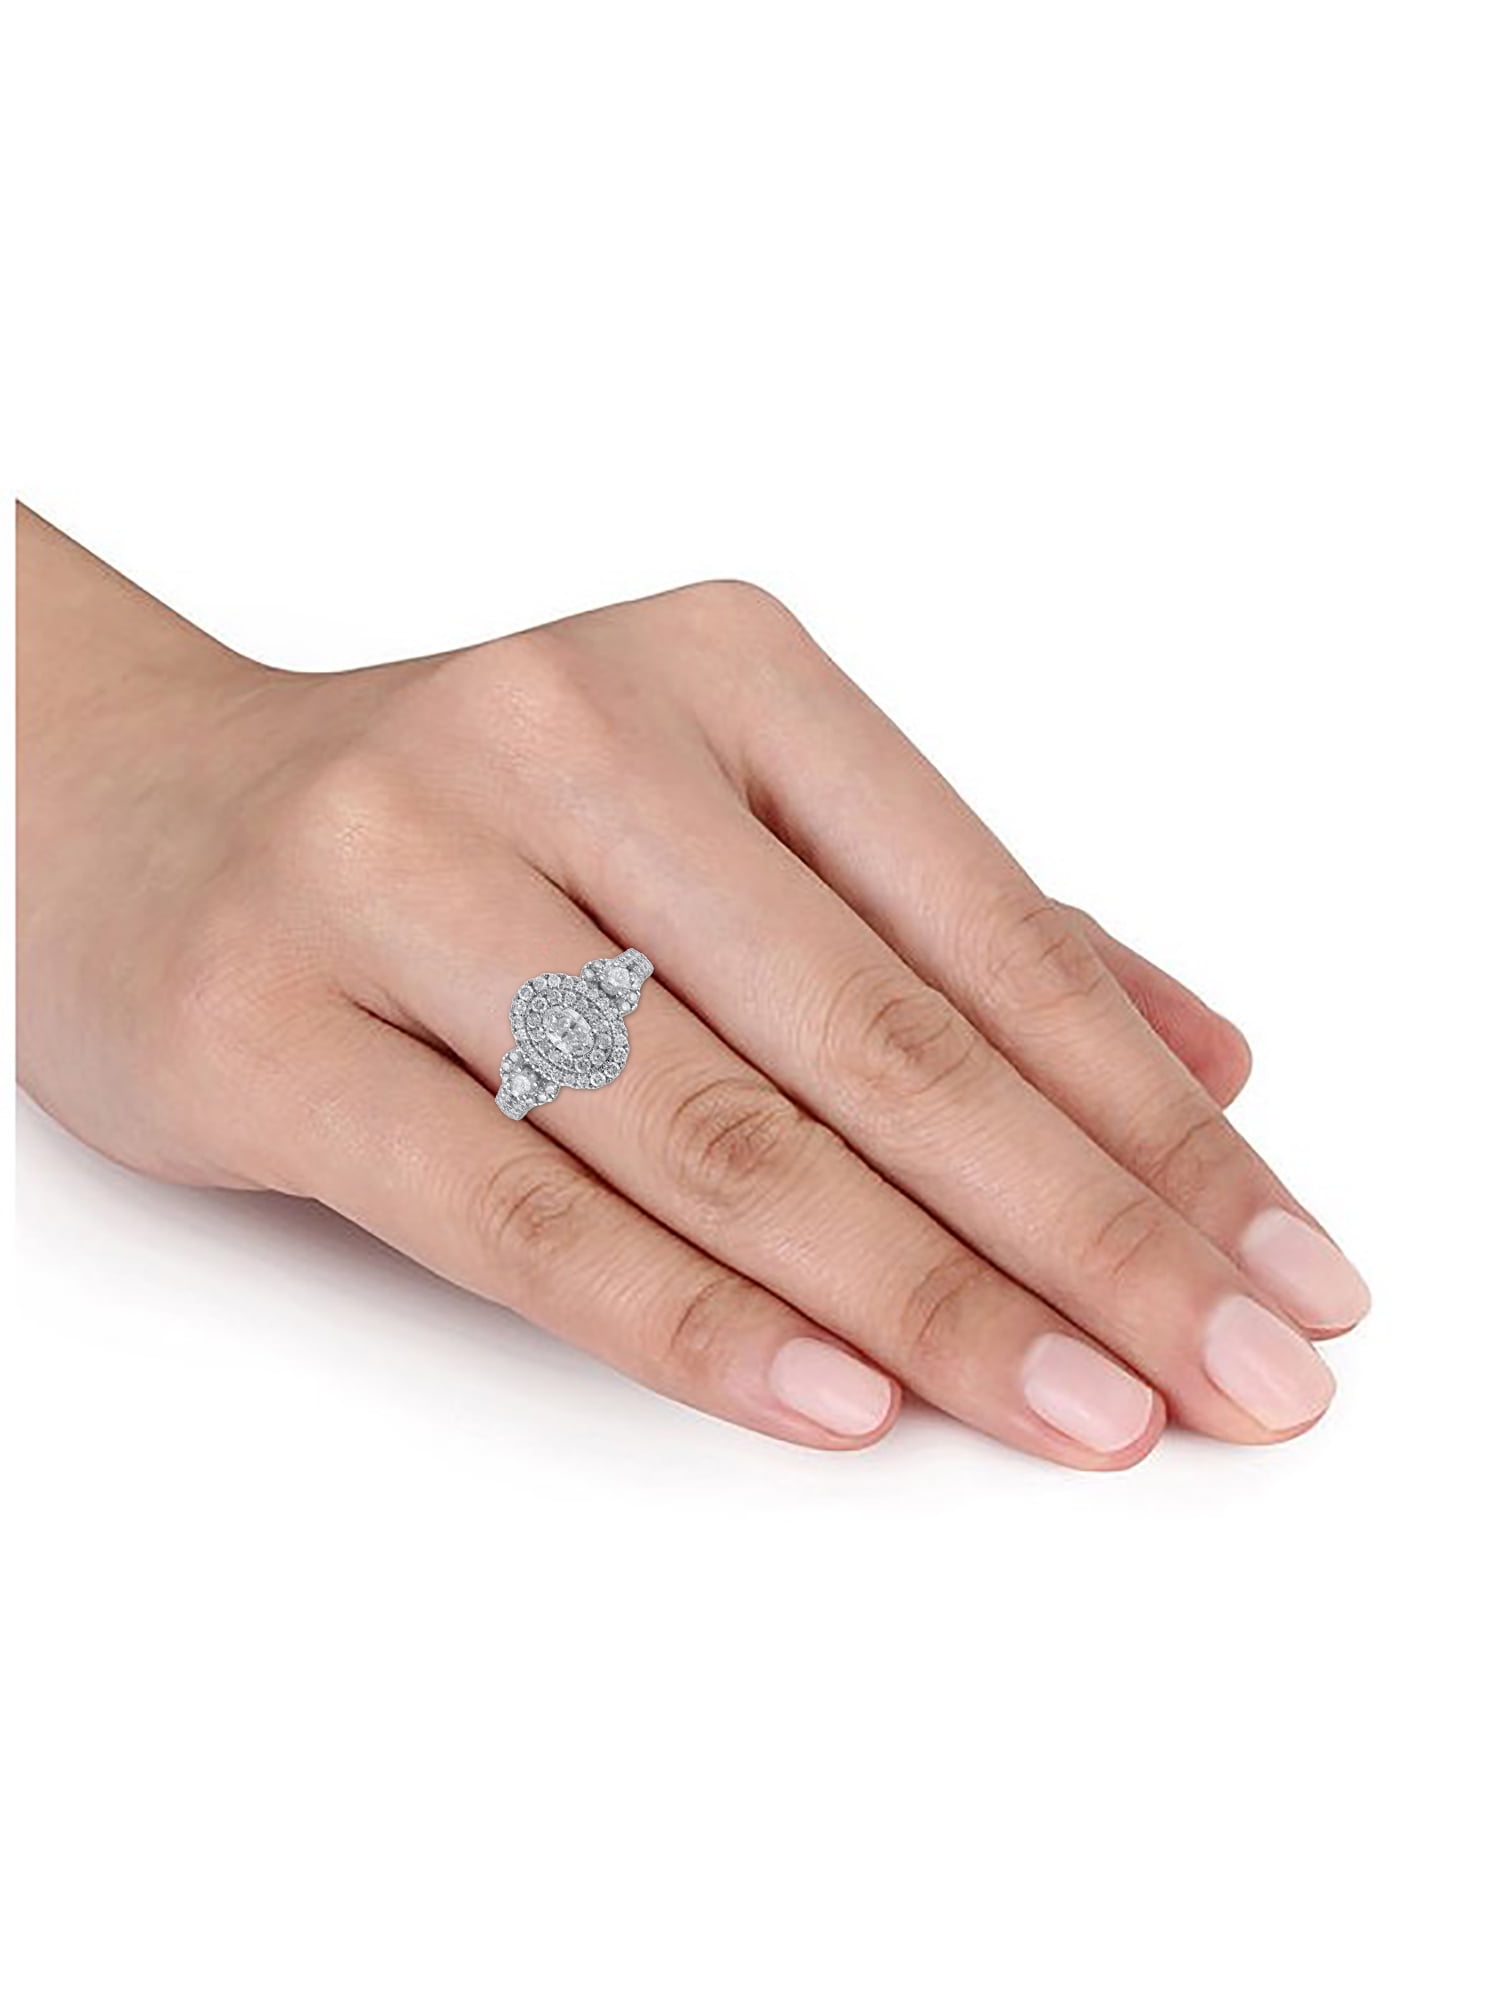 3 Carat Diamond Rings: Your Guide To Going Big | VRAI Created Diamonds